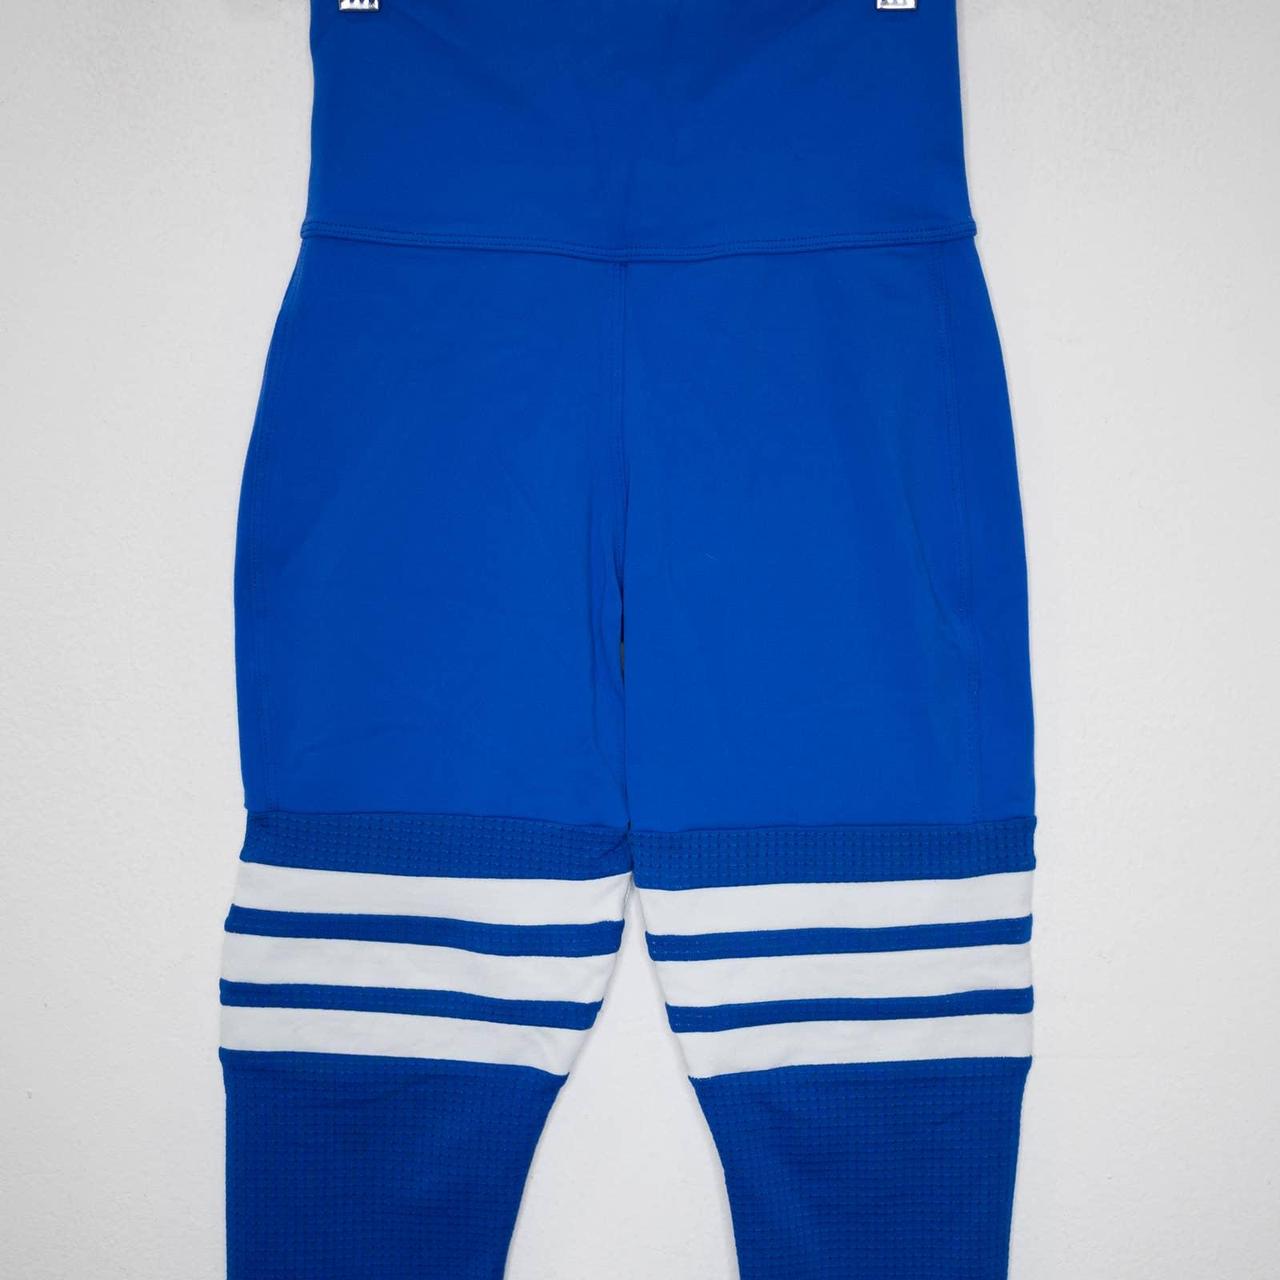 Bombshell Sportswear Original Sock Leggings in Blue/White Small - Athletic  apparel